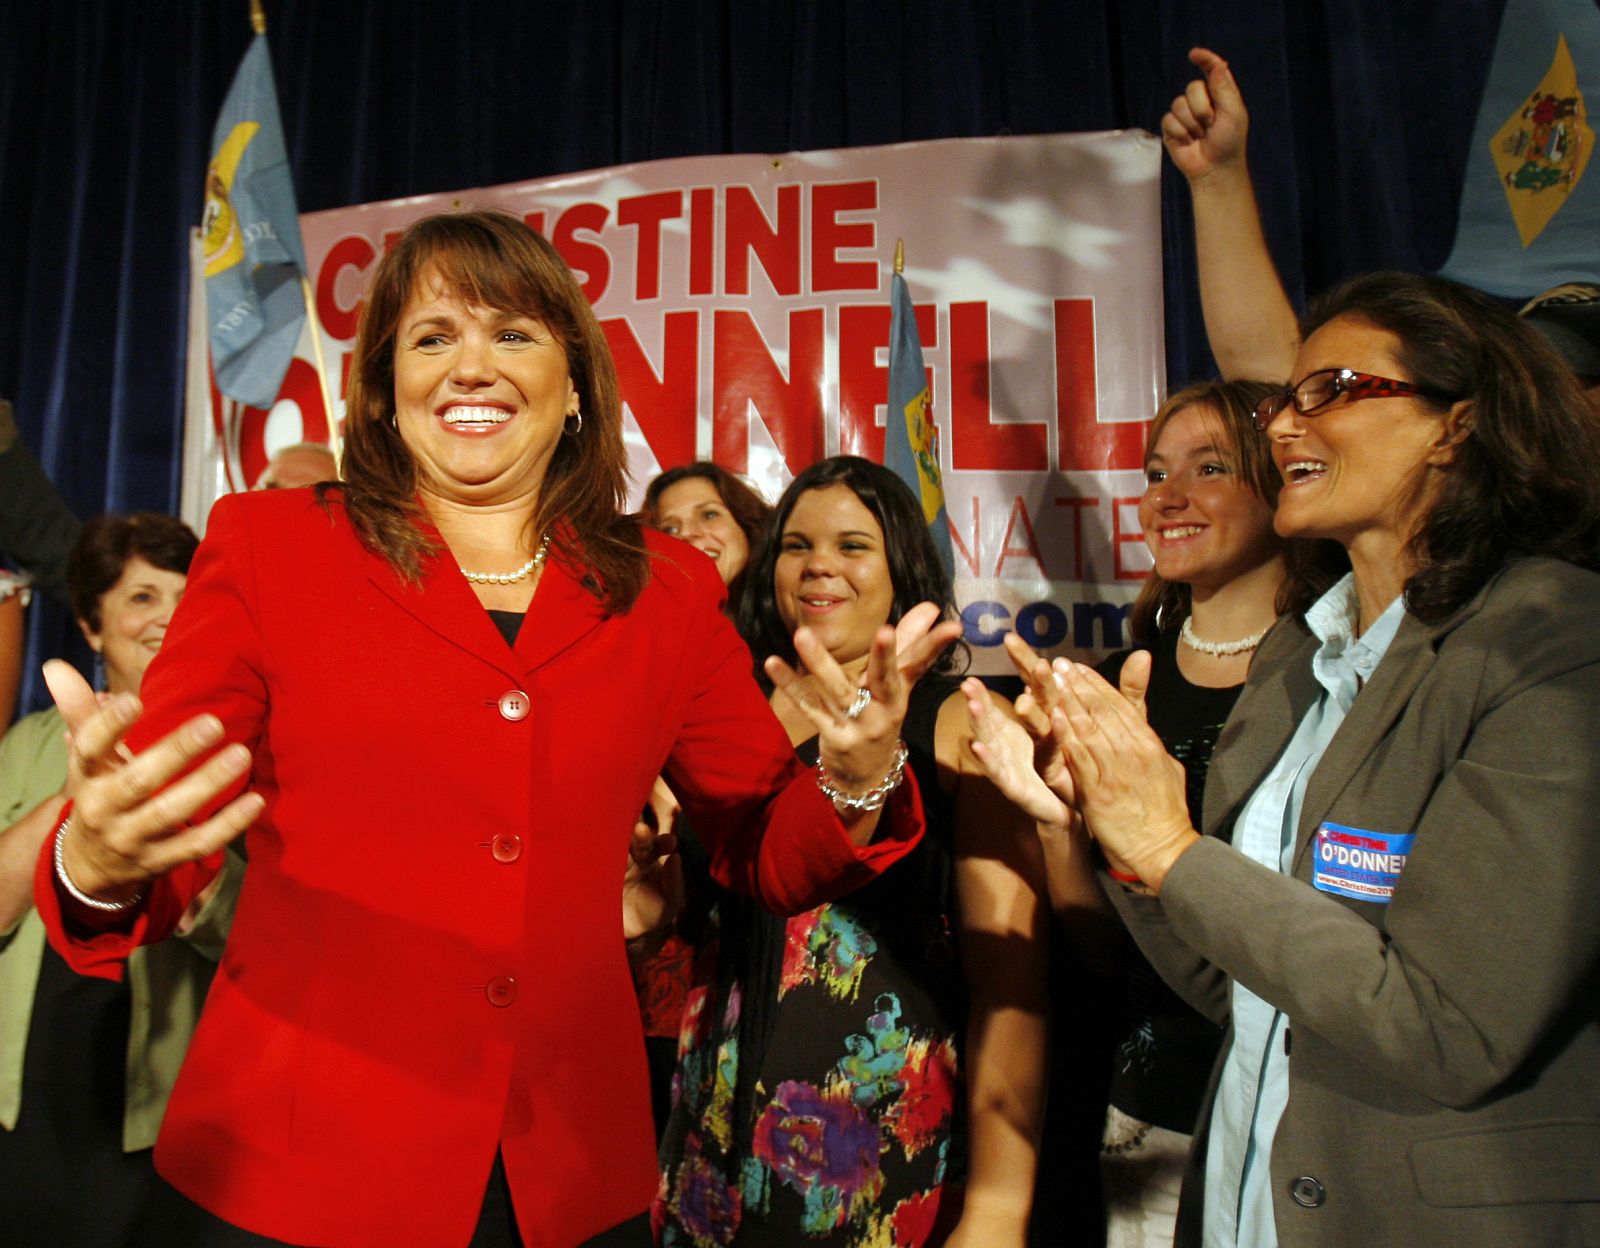 Delaware Republican senatorial candidate Christine O'Donnell celebrates her win in the Republican primary at her campaign victory event in Dover